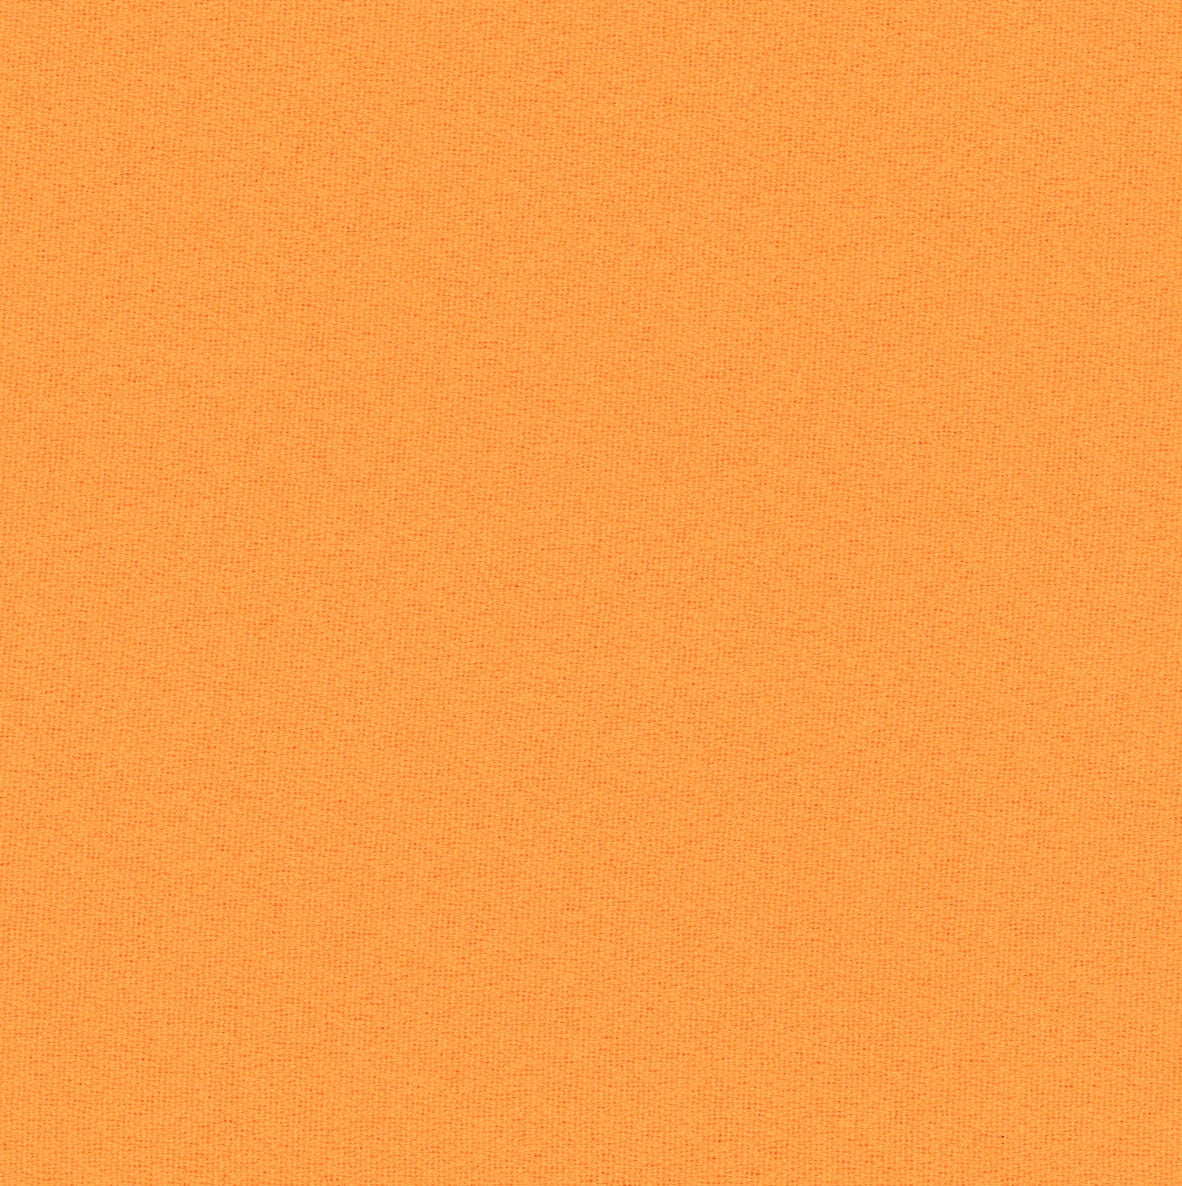 35001-03 Carrot Orange Crepe Plain Dyed Blend 315g/yd 54&quot; crepe orange plain dyed polyester woven Solid Color - knit fabric - woven fabric - fabric company - fabric wholesale - fabric b2b - fabric factory - high quality fabric - hong kong fabric - fabric hk - acetate fabric - cotton fabric - linen fabric - metallic fabric - nylon fabric - polyester fabric - spandex fabric - chun wing hing - cwh hk - fabric worldwide ship - 針織布 - 梳織布 - 布料公司- 布料批發 - 香港布料 - 秦榮興